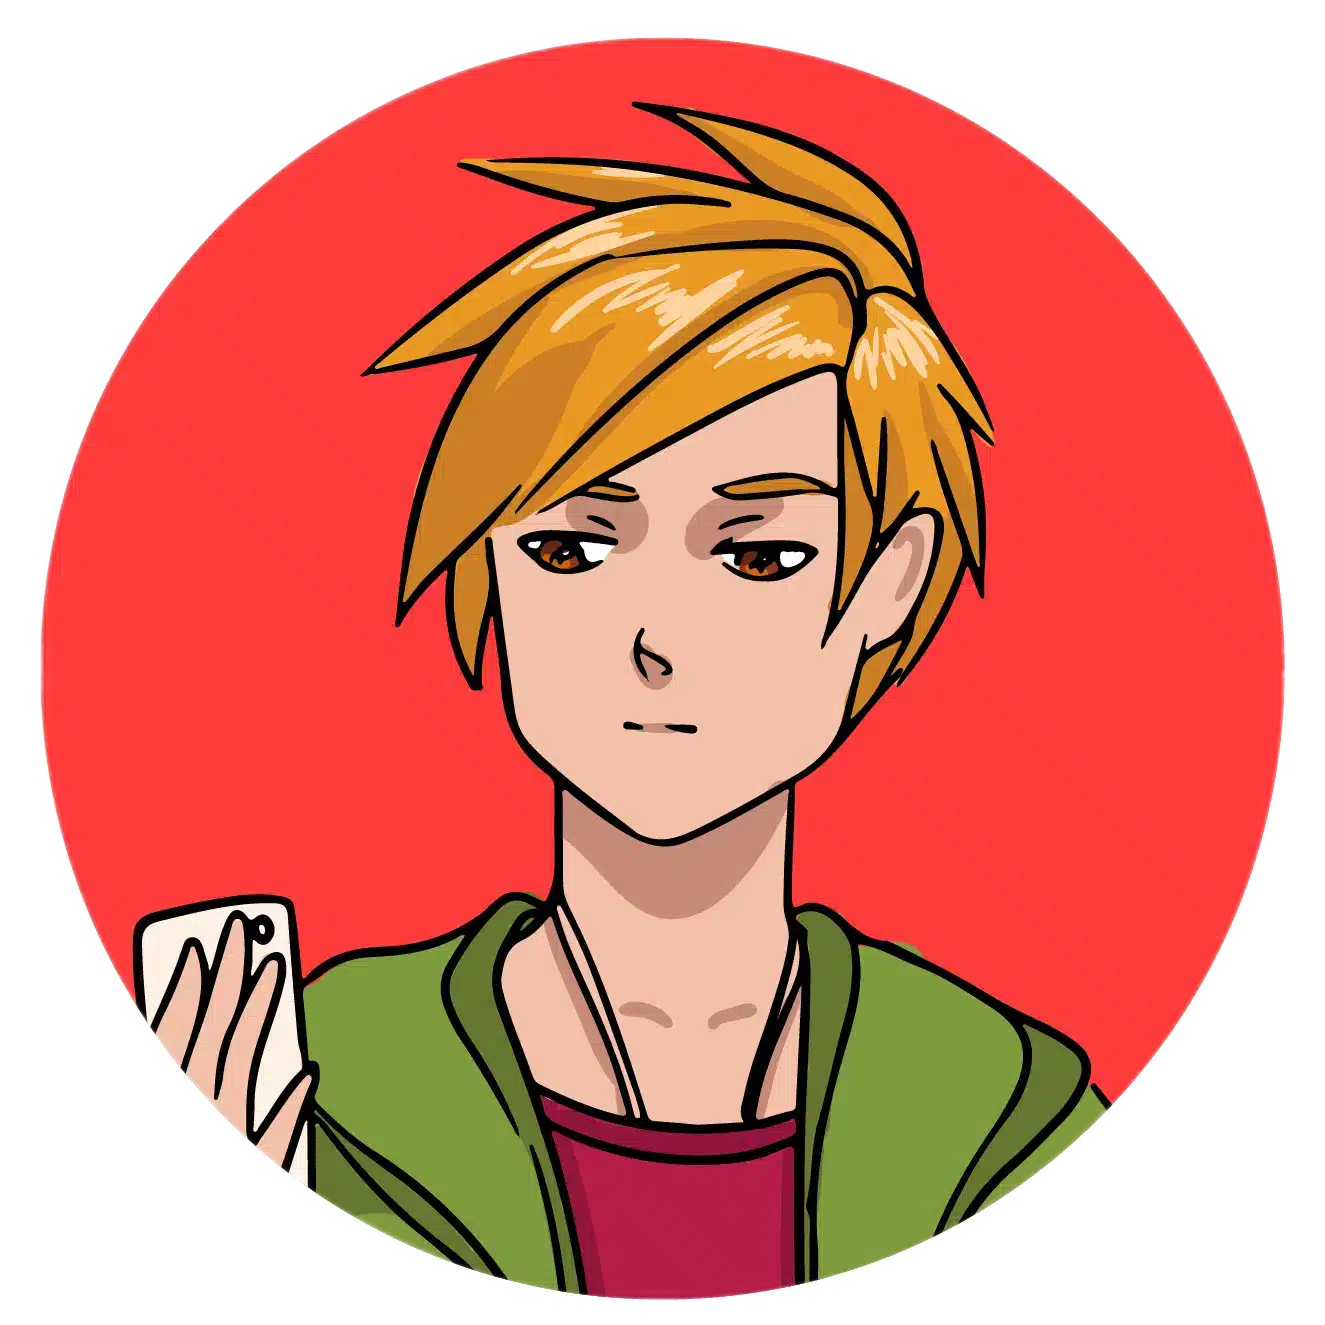 anime-avatar-icon-boy-1 (1)